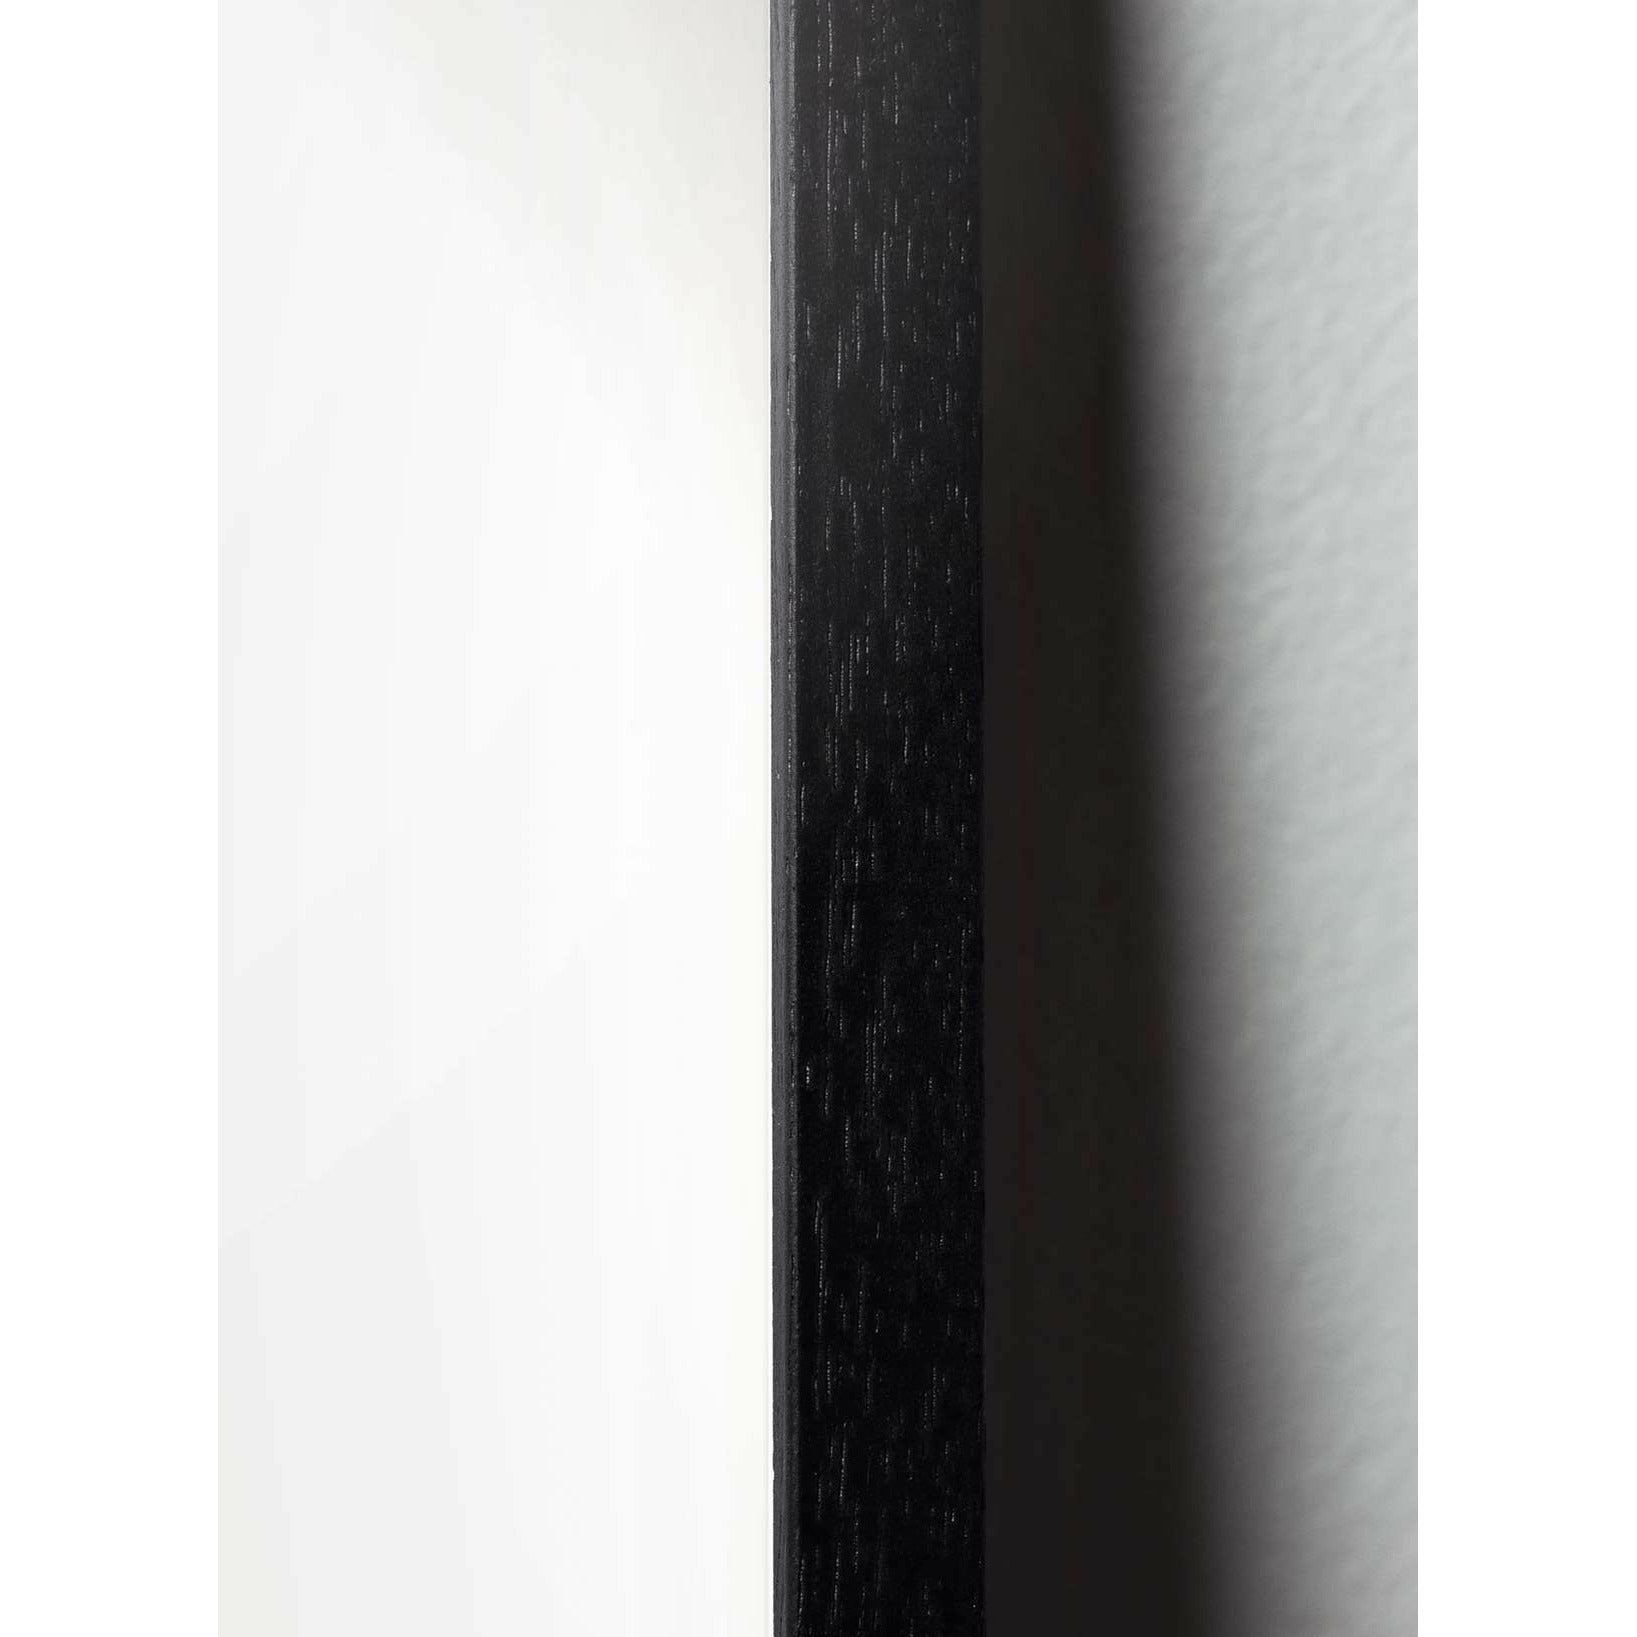 Brainchild Ontwerppictogram Poster, frame in zwart gelakt hout 30x40 cm, kleur